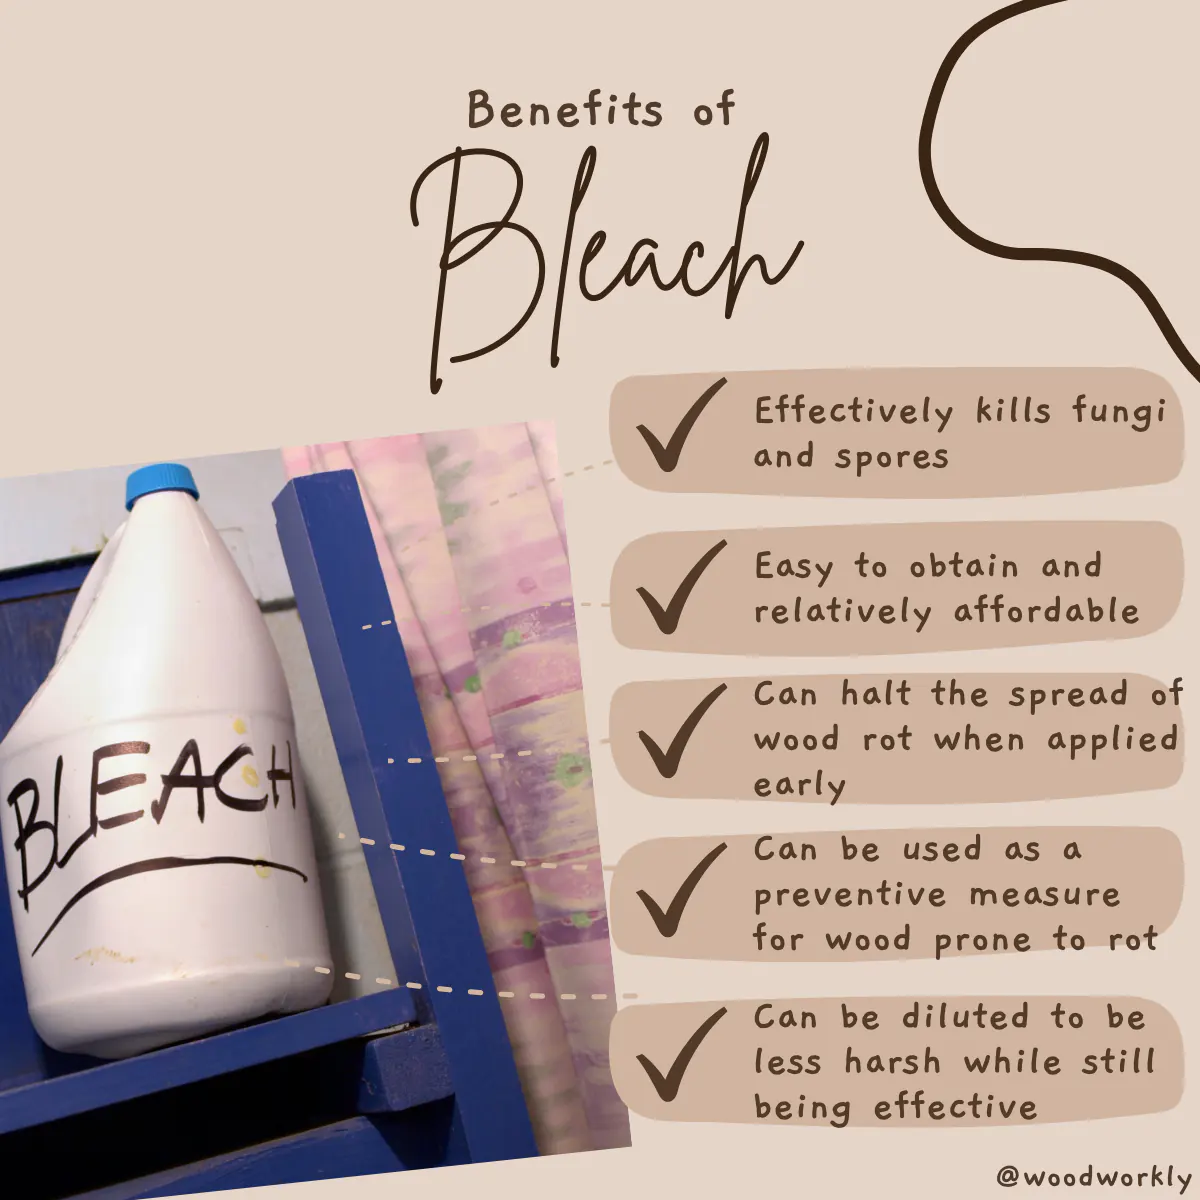 Benefits of using bleach